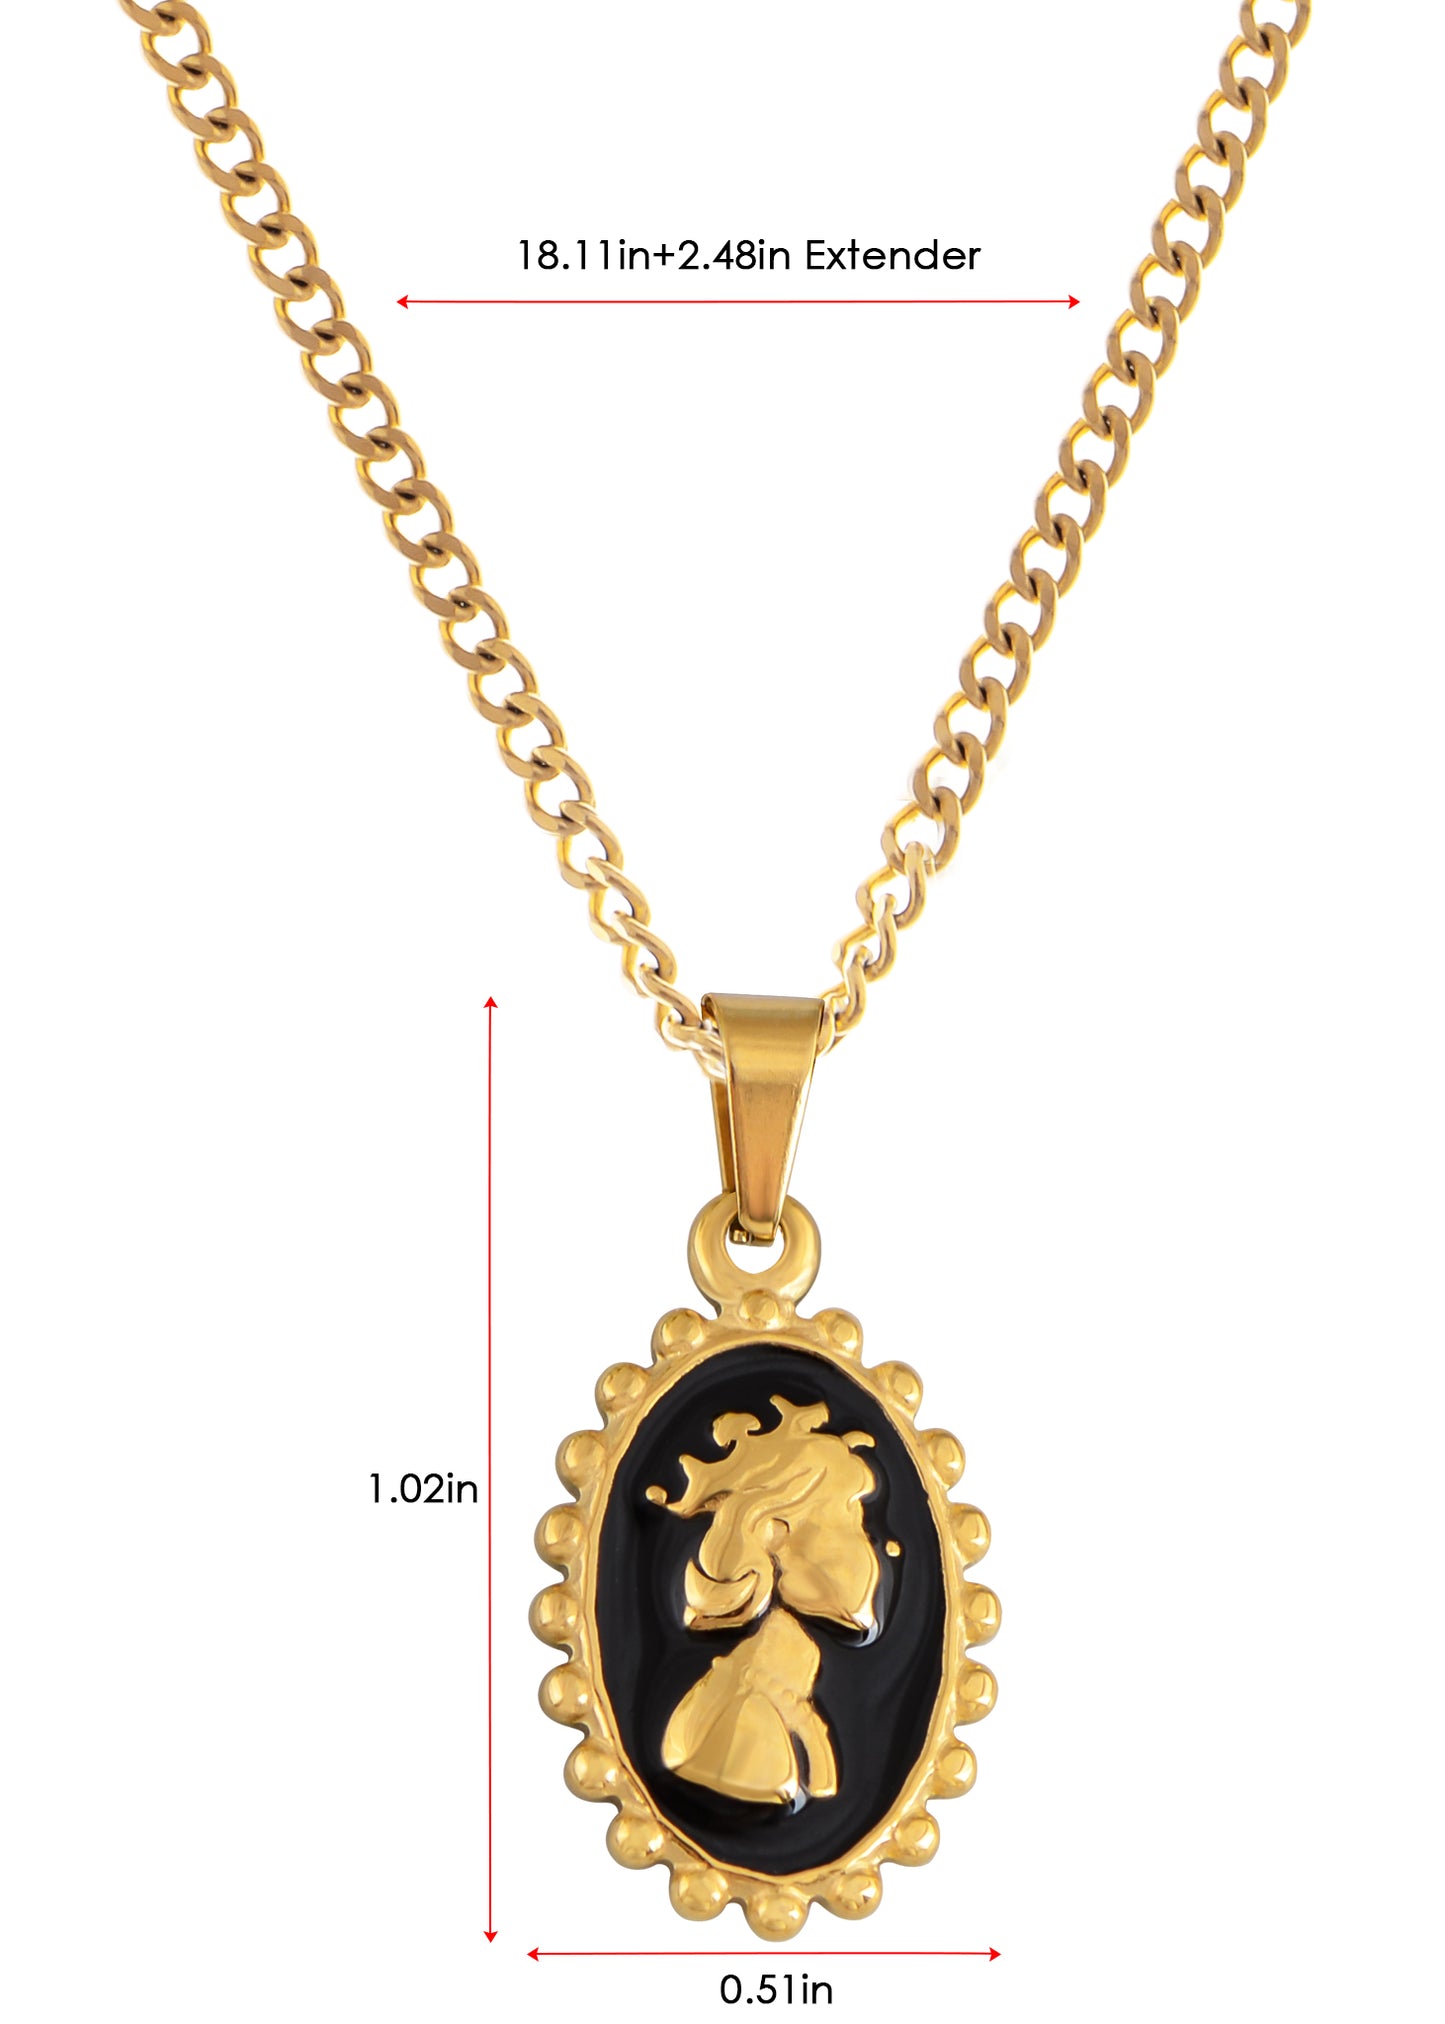 Alilang Vintage Inspired Black Enamel Queen Lady Cameo Pendant Necklace